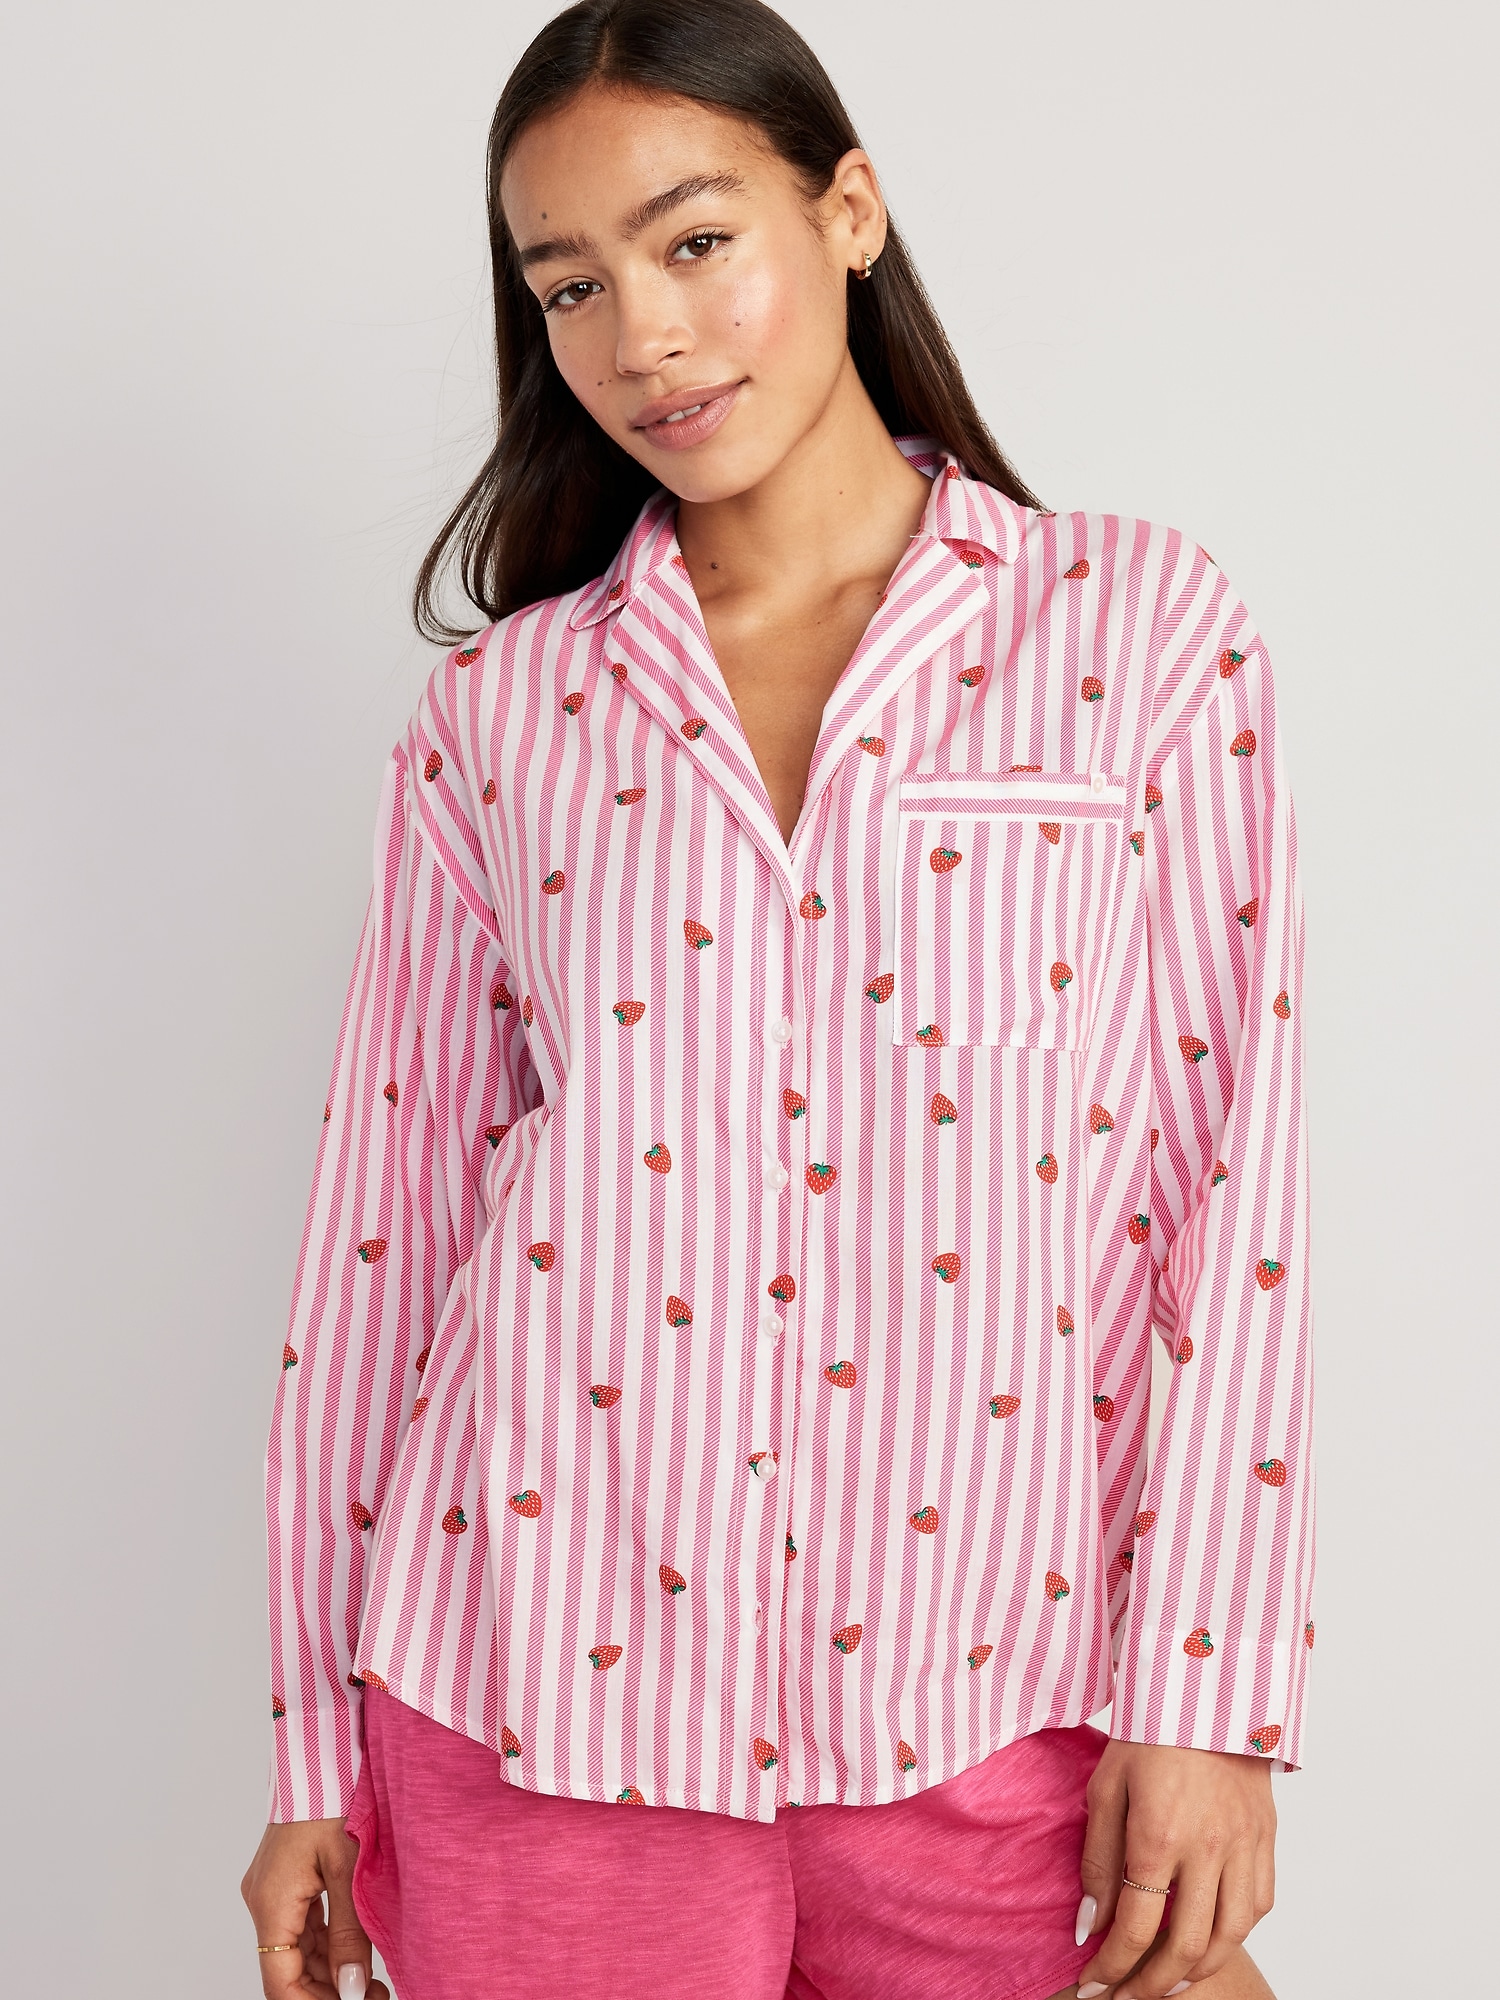 Matching Button-Down Pajama Top for Women